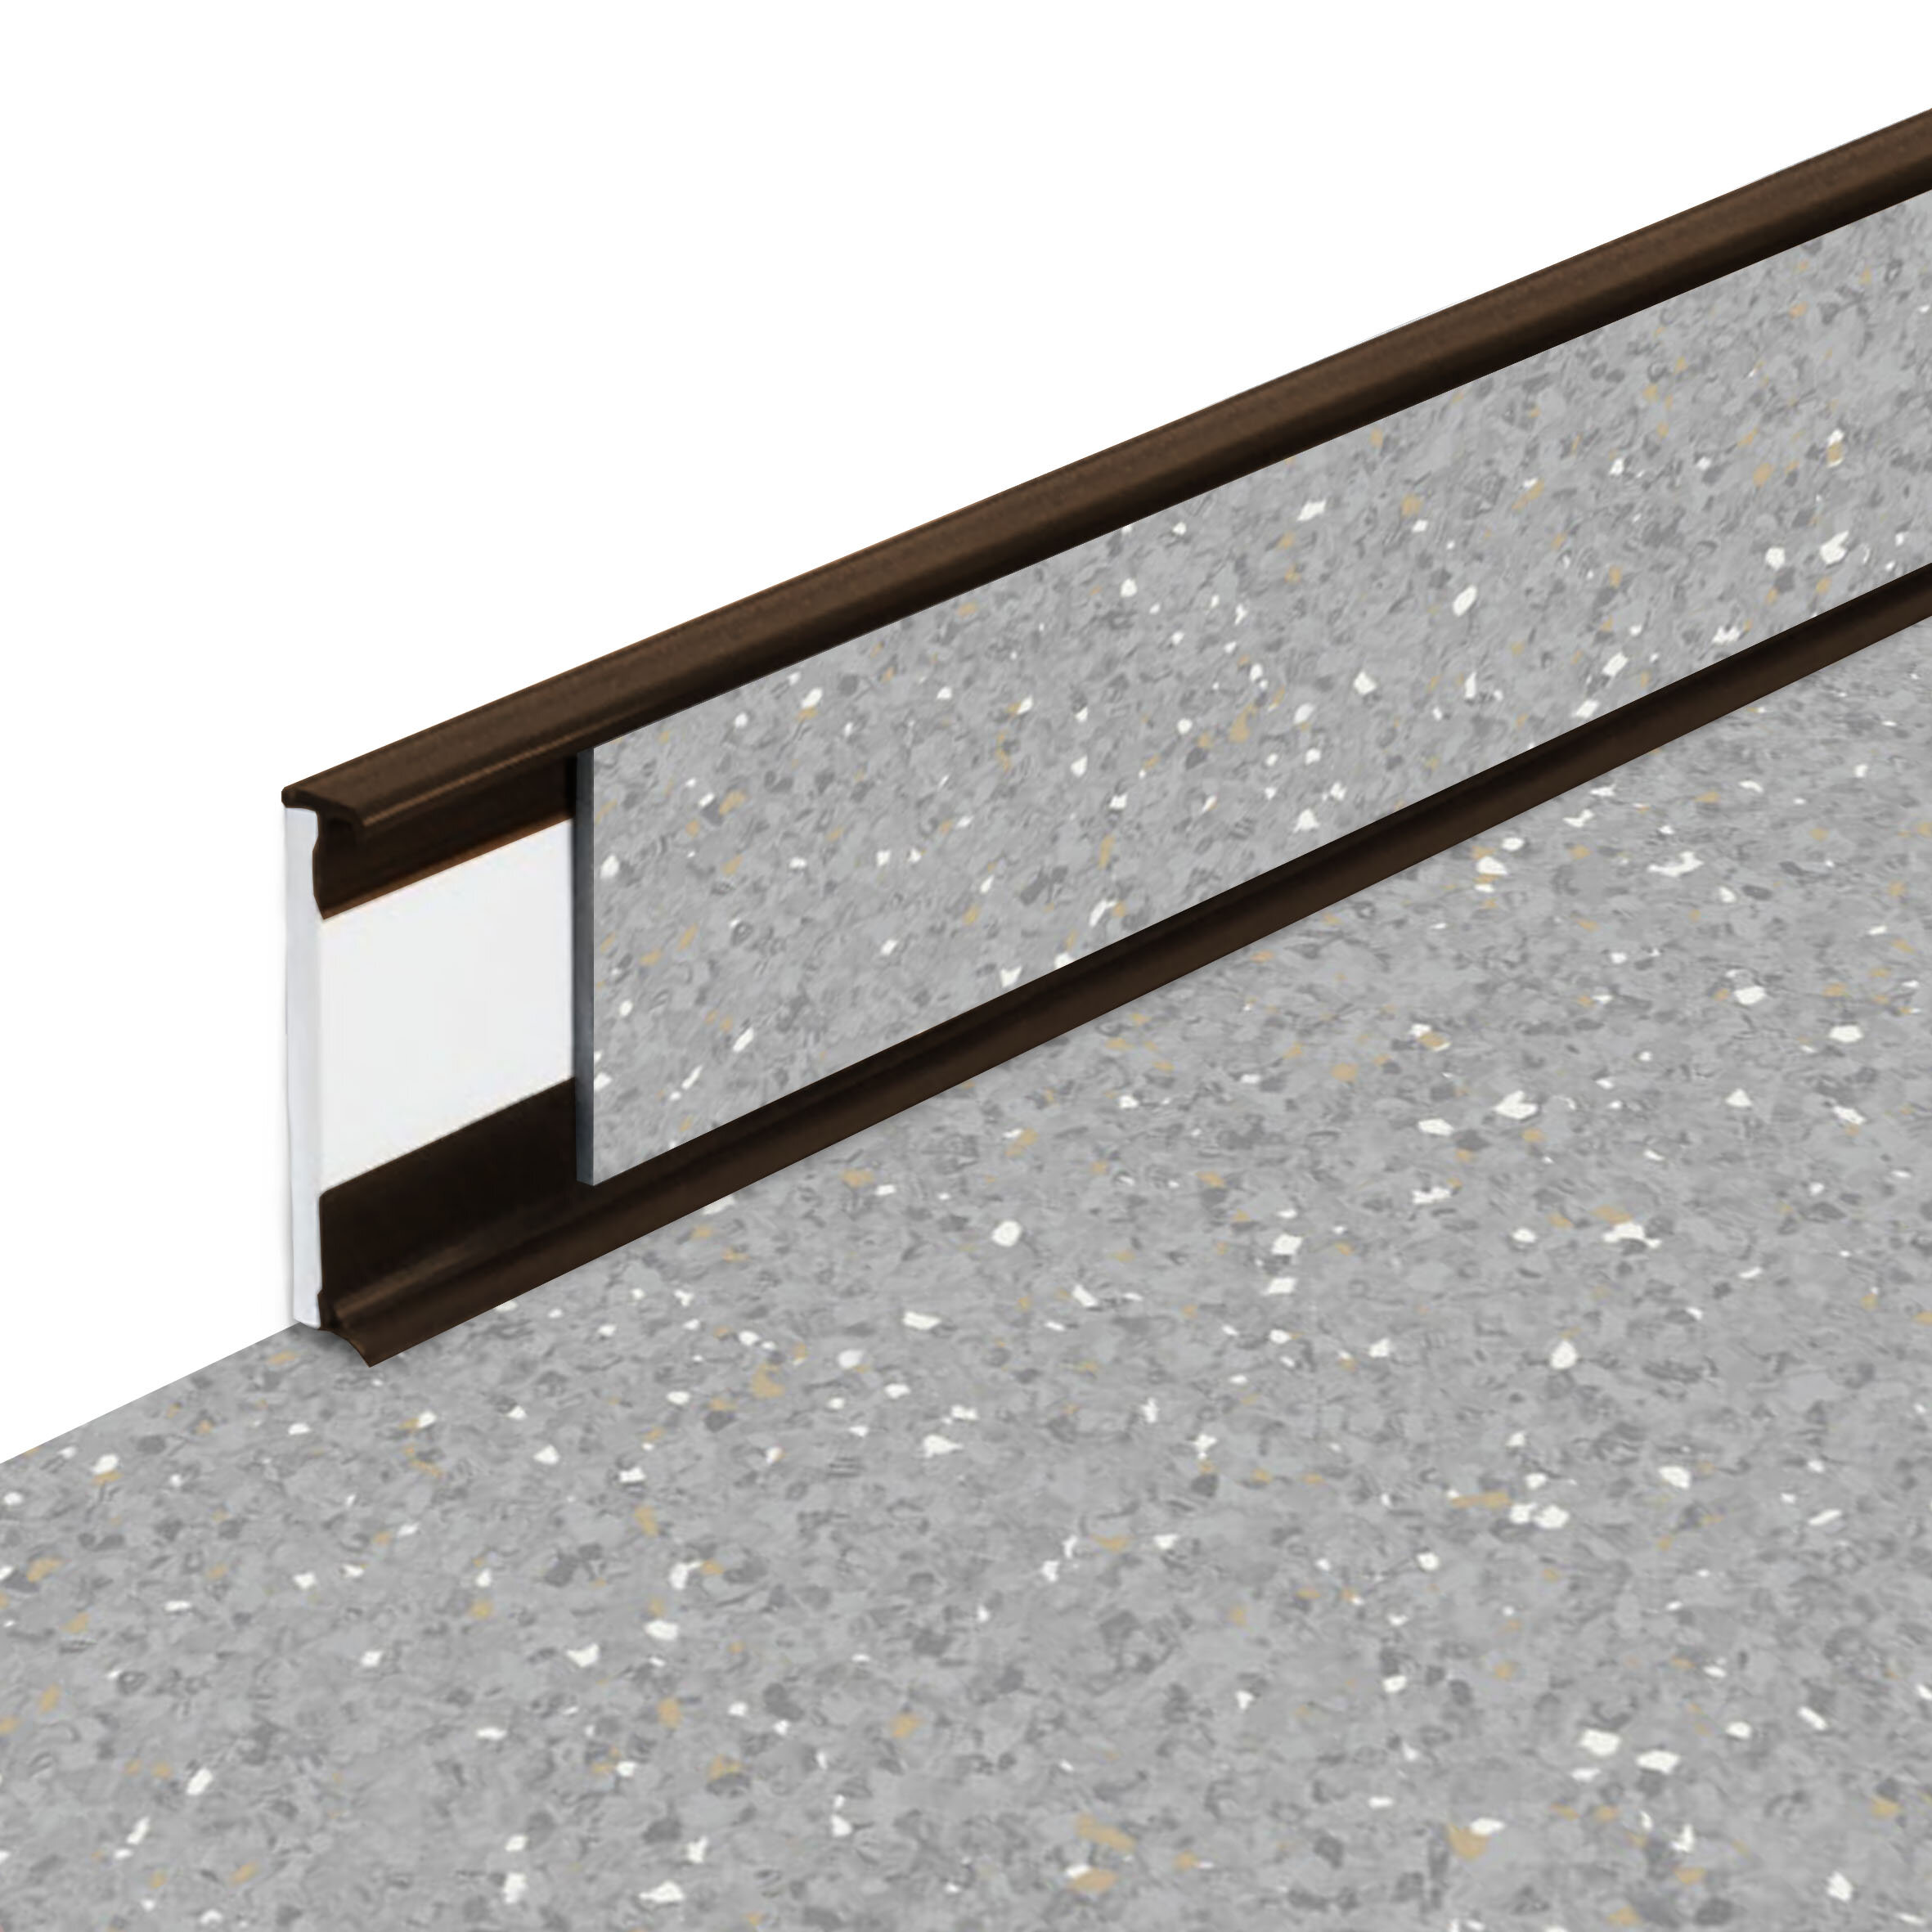 PVC vinylová soklová podlahová lišta Fortelock Business Sauda hidden treasure G002 brown - délka 200 cm, výška 5,8 cm, tloušťka 1,2 cm